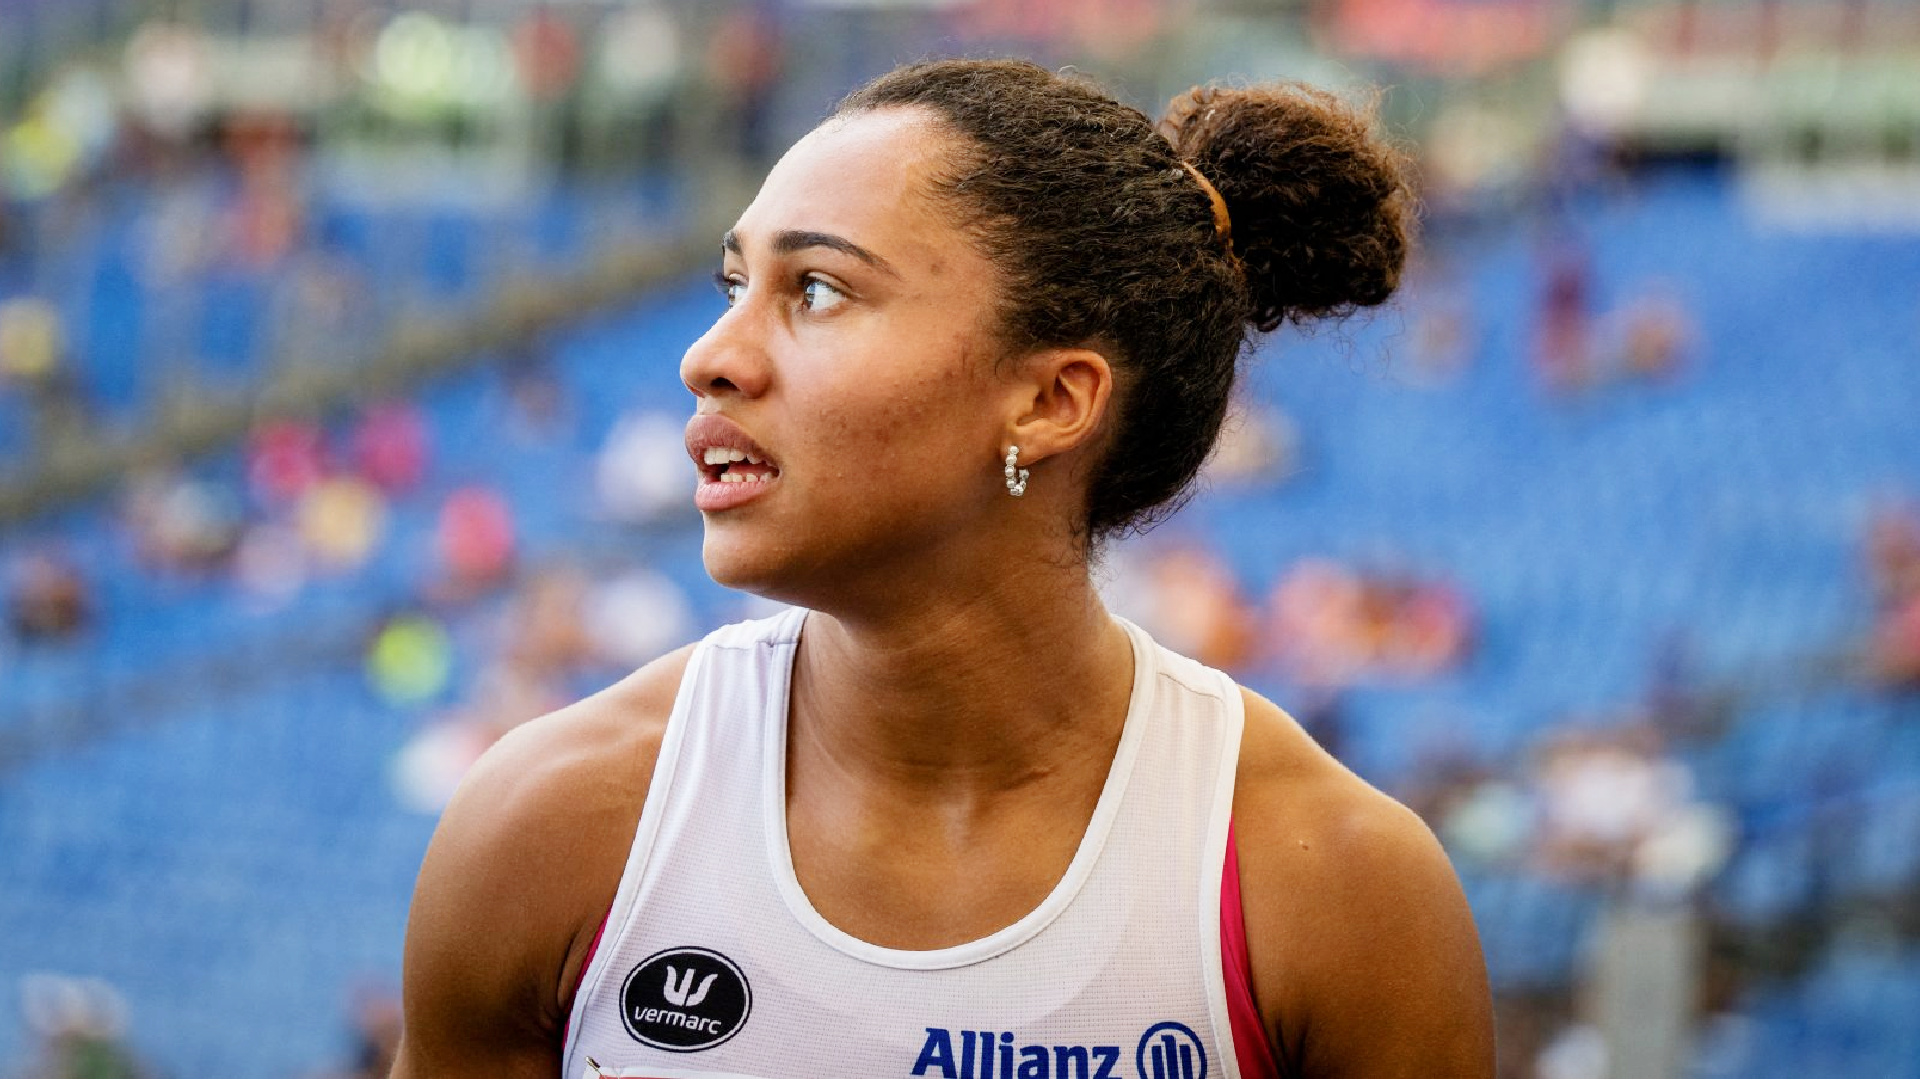 La llamada de última hora que dejó fuera de la final del Europeo de Atletismo a esta atleta belga